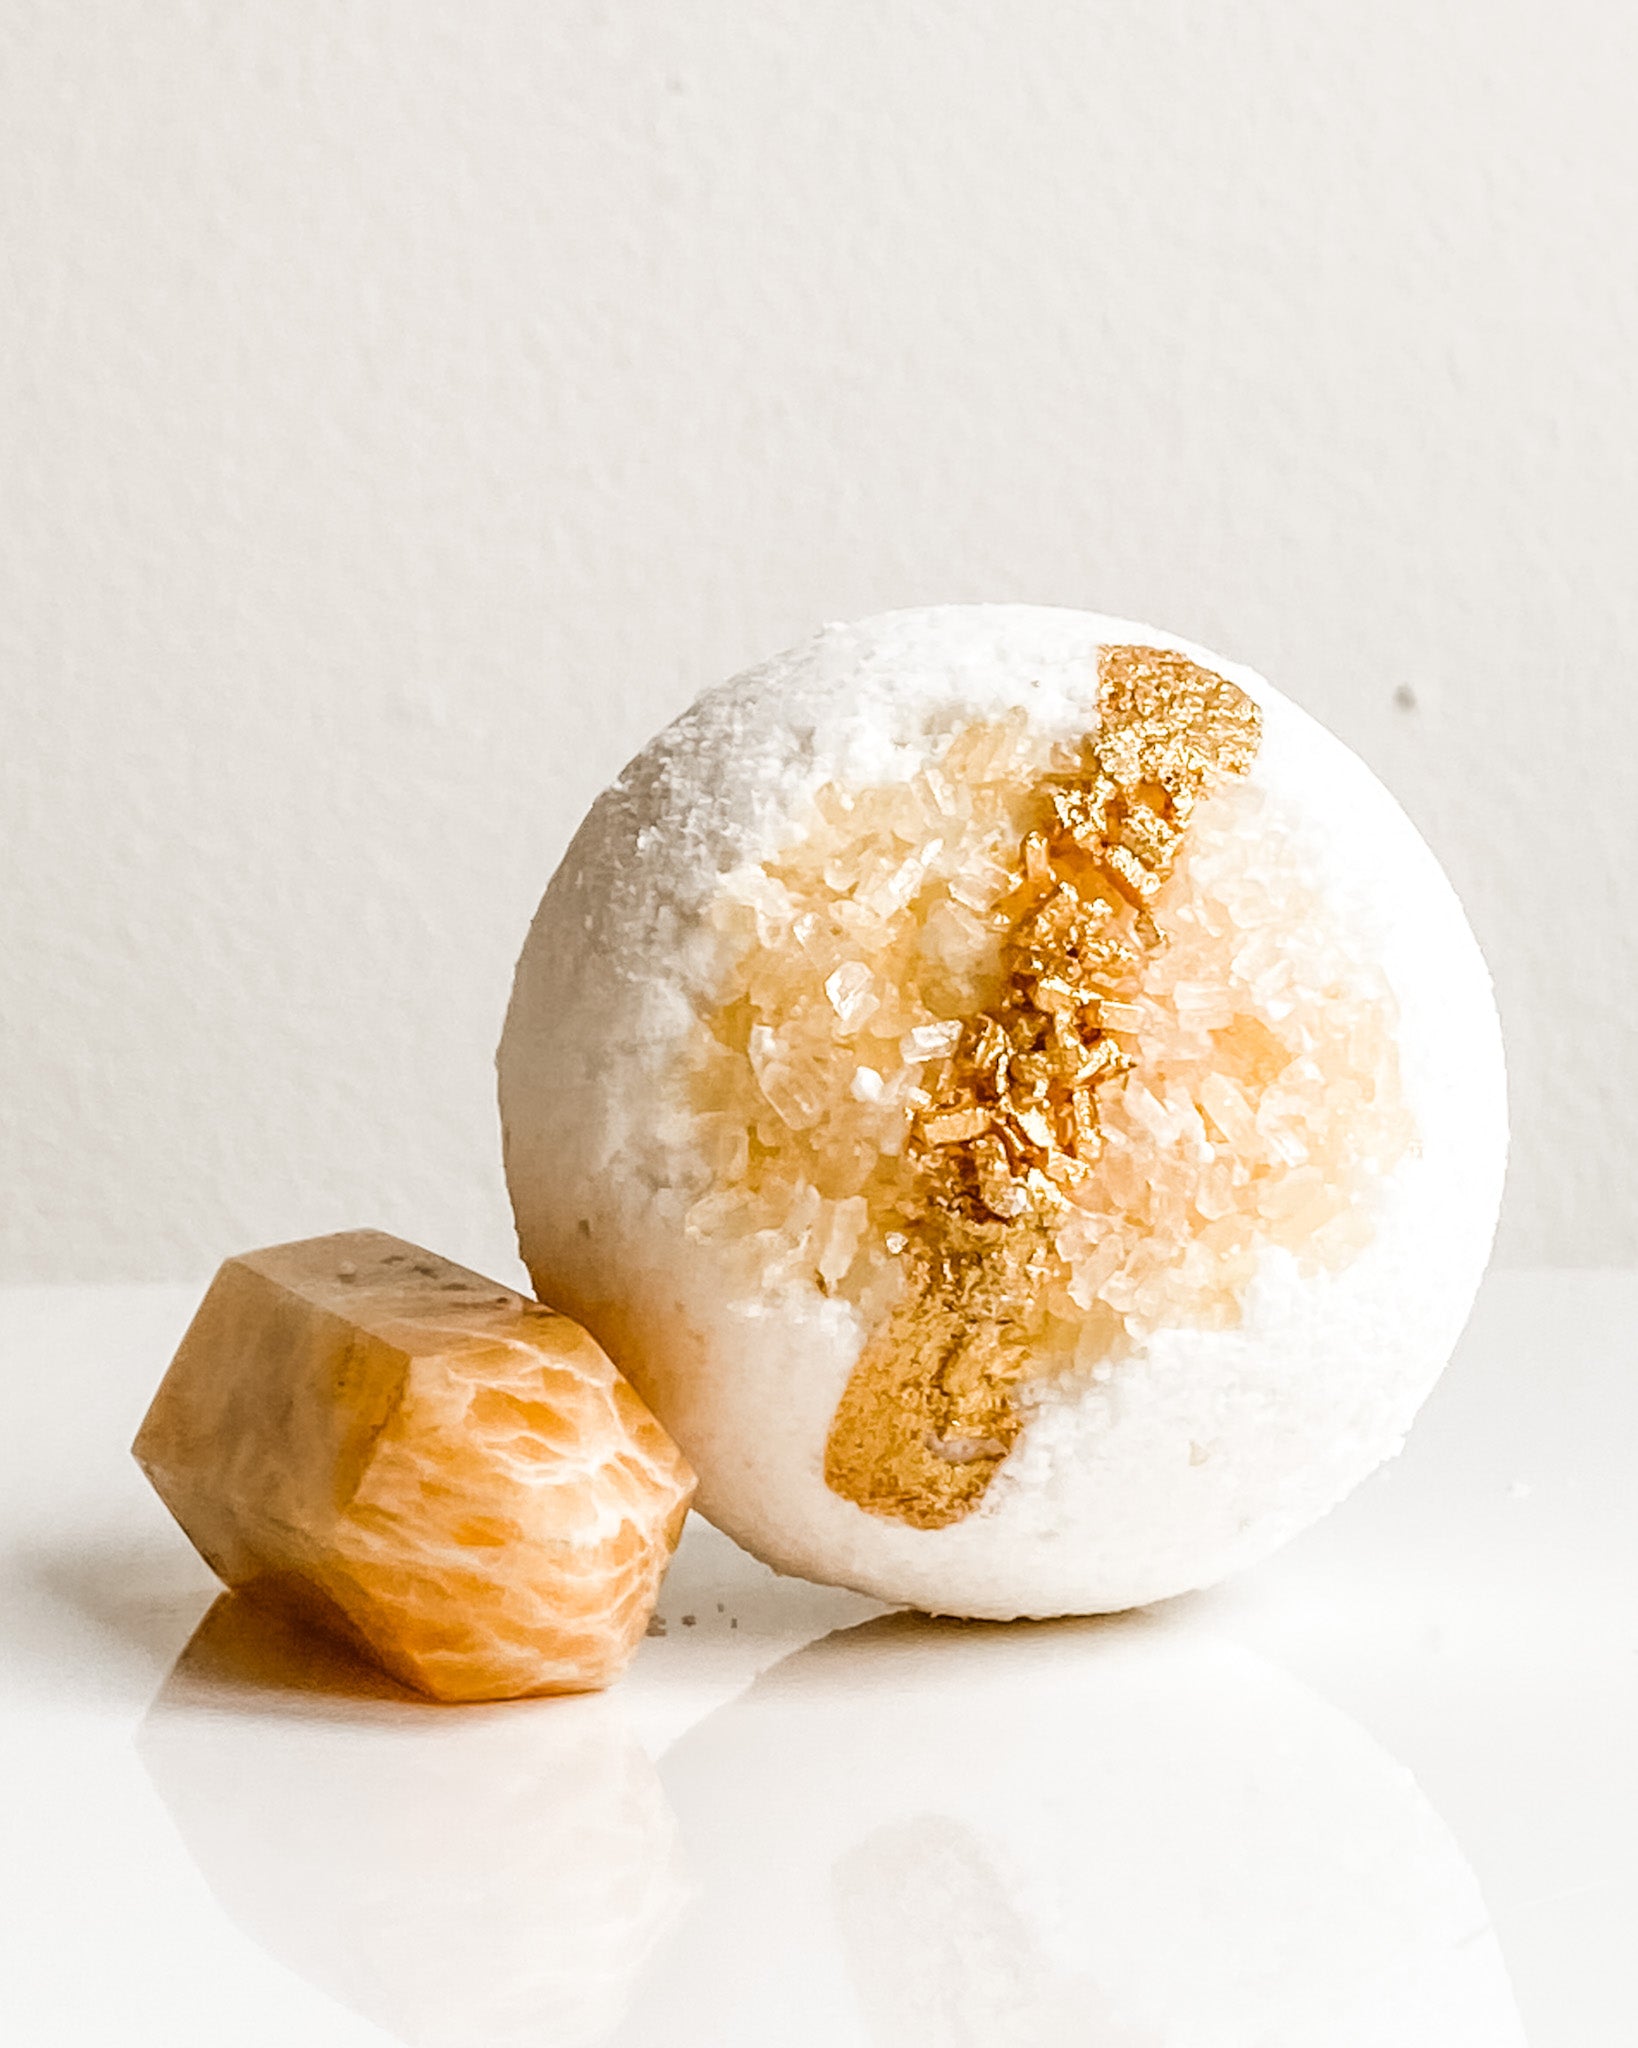 Crystal bath bomb gift set | Hidden Forest Naturals - Handmade with Natural Ingredients. Hidden Forest Naturals